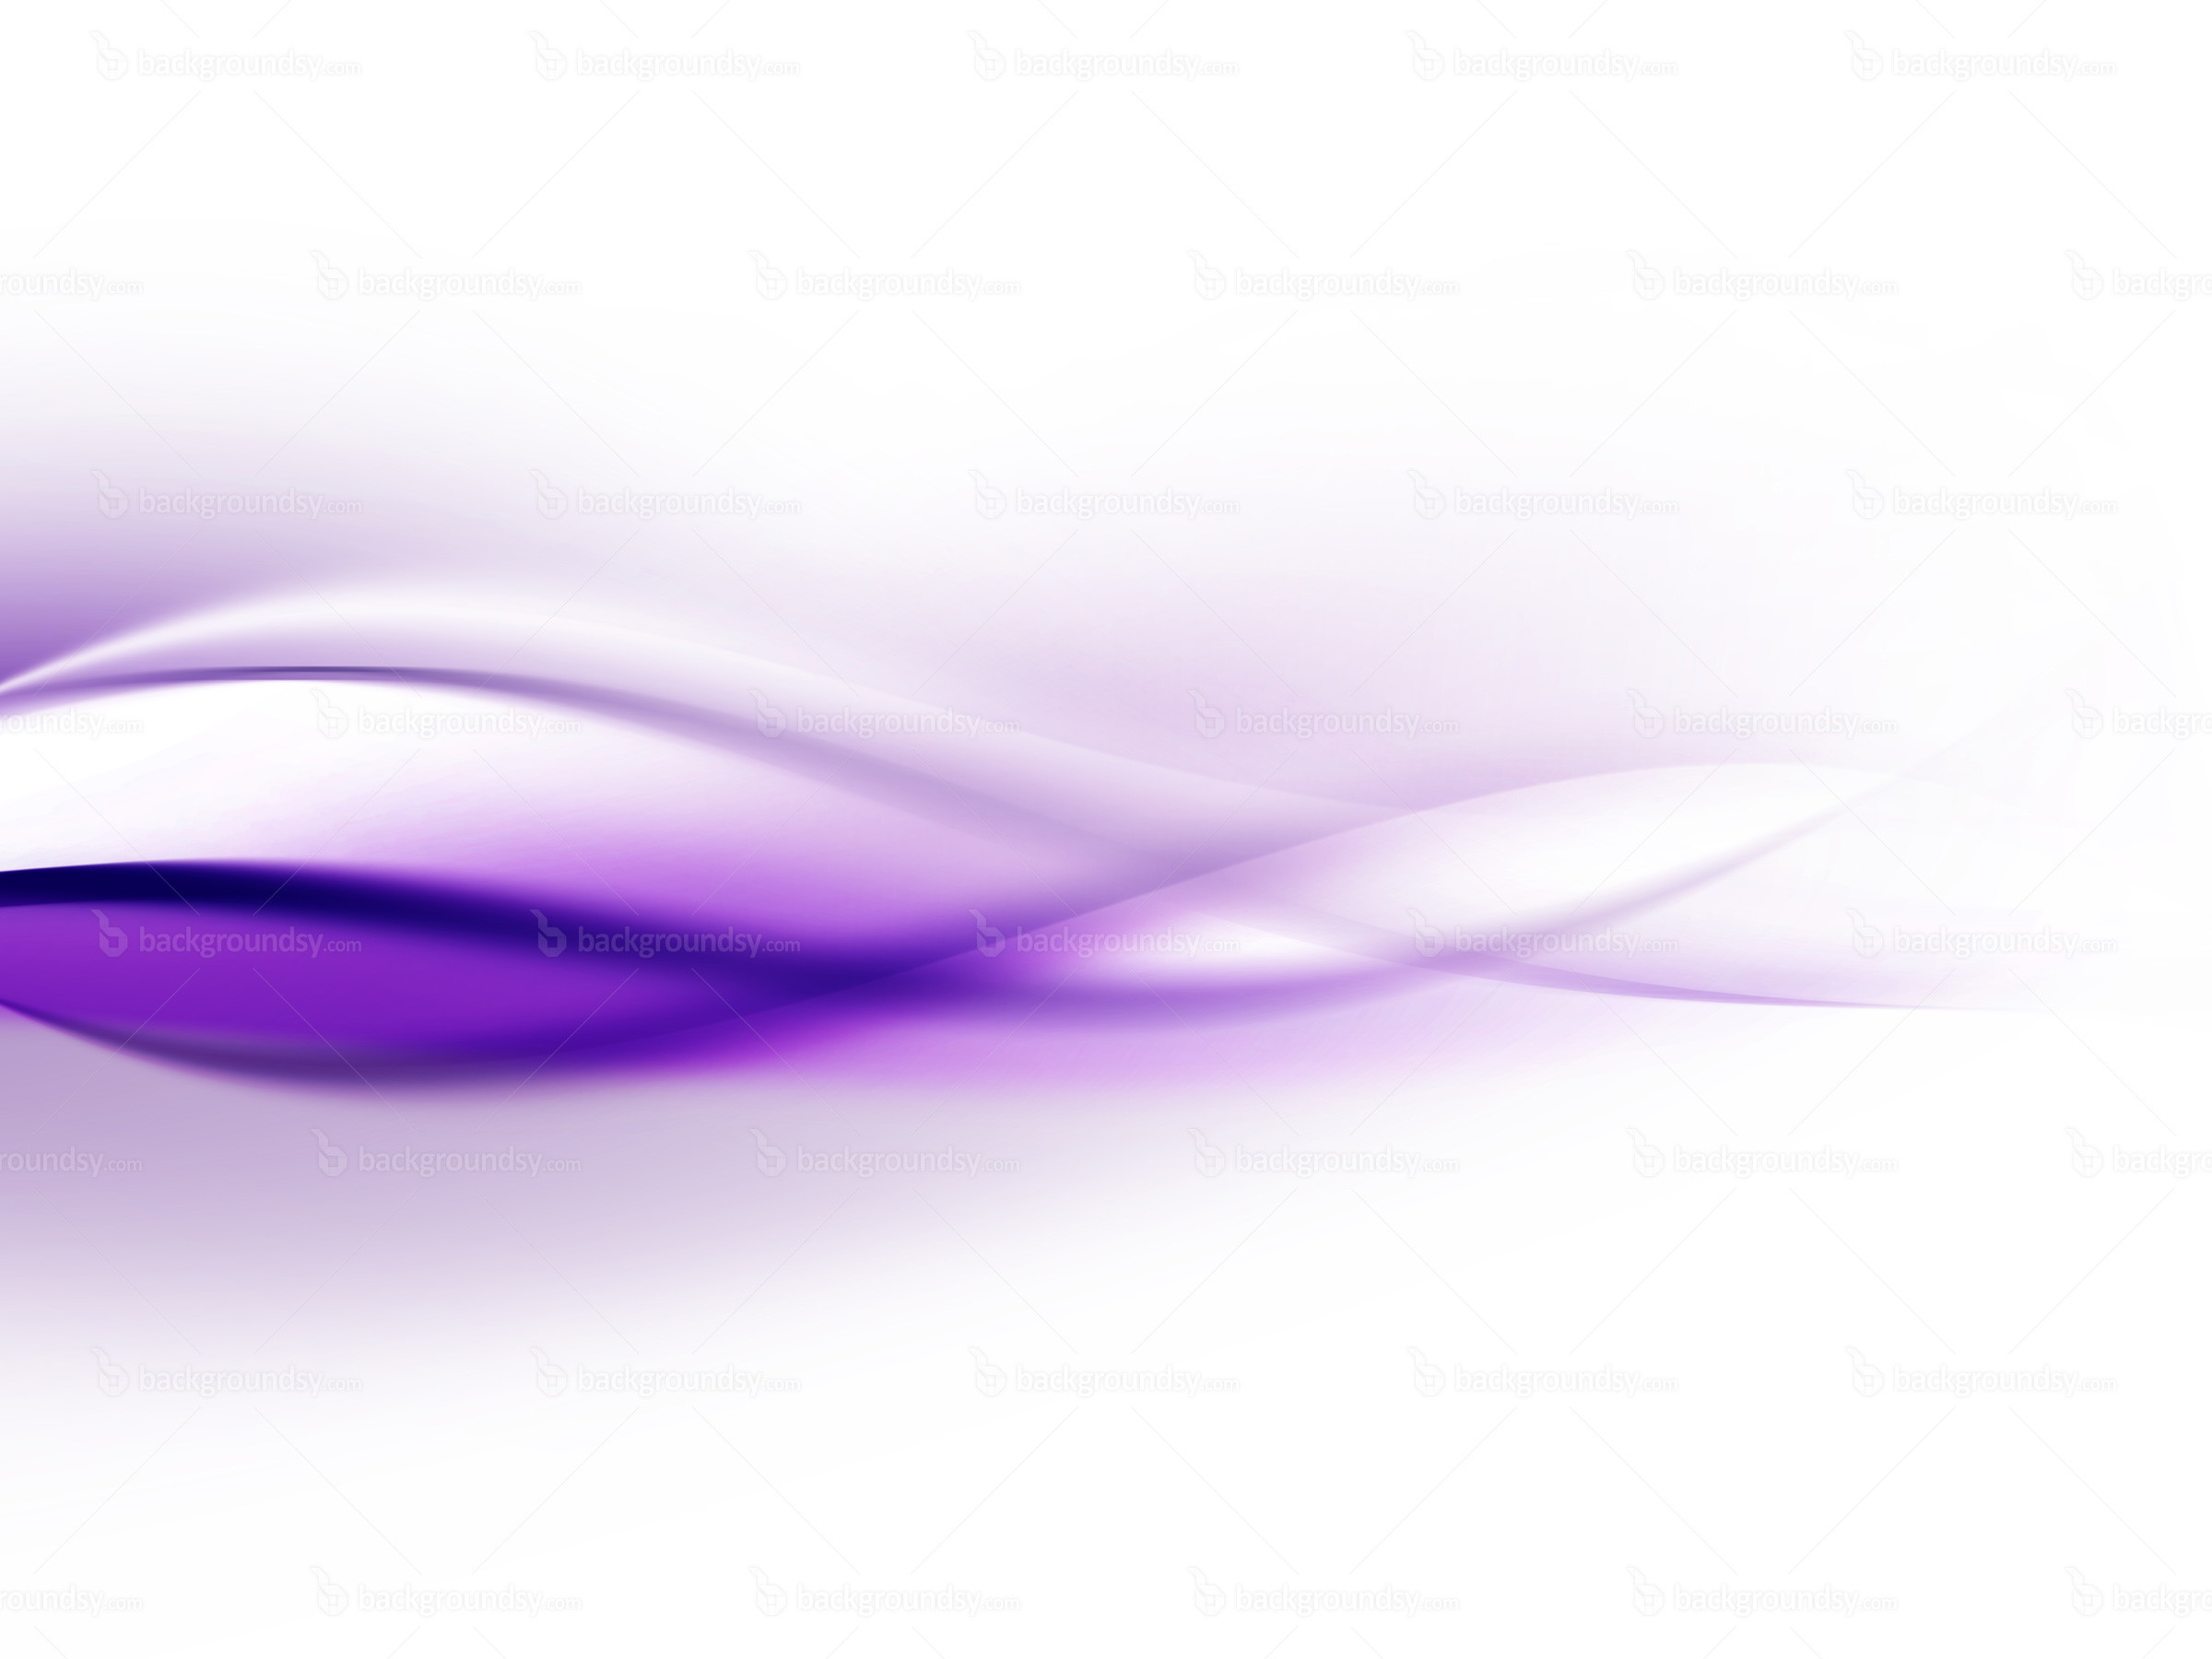 2400x1800 Purple and White Wallpaper - WallpaperSafari